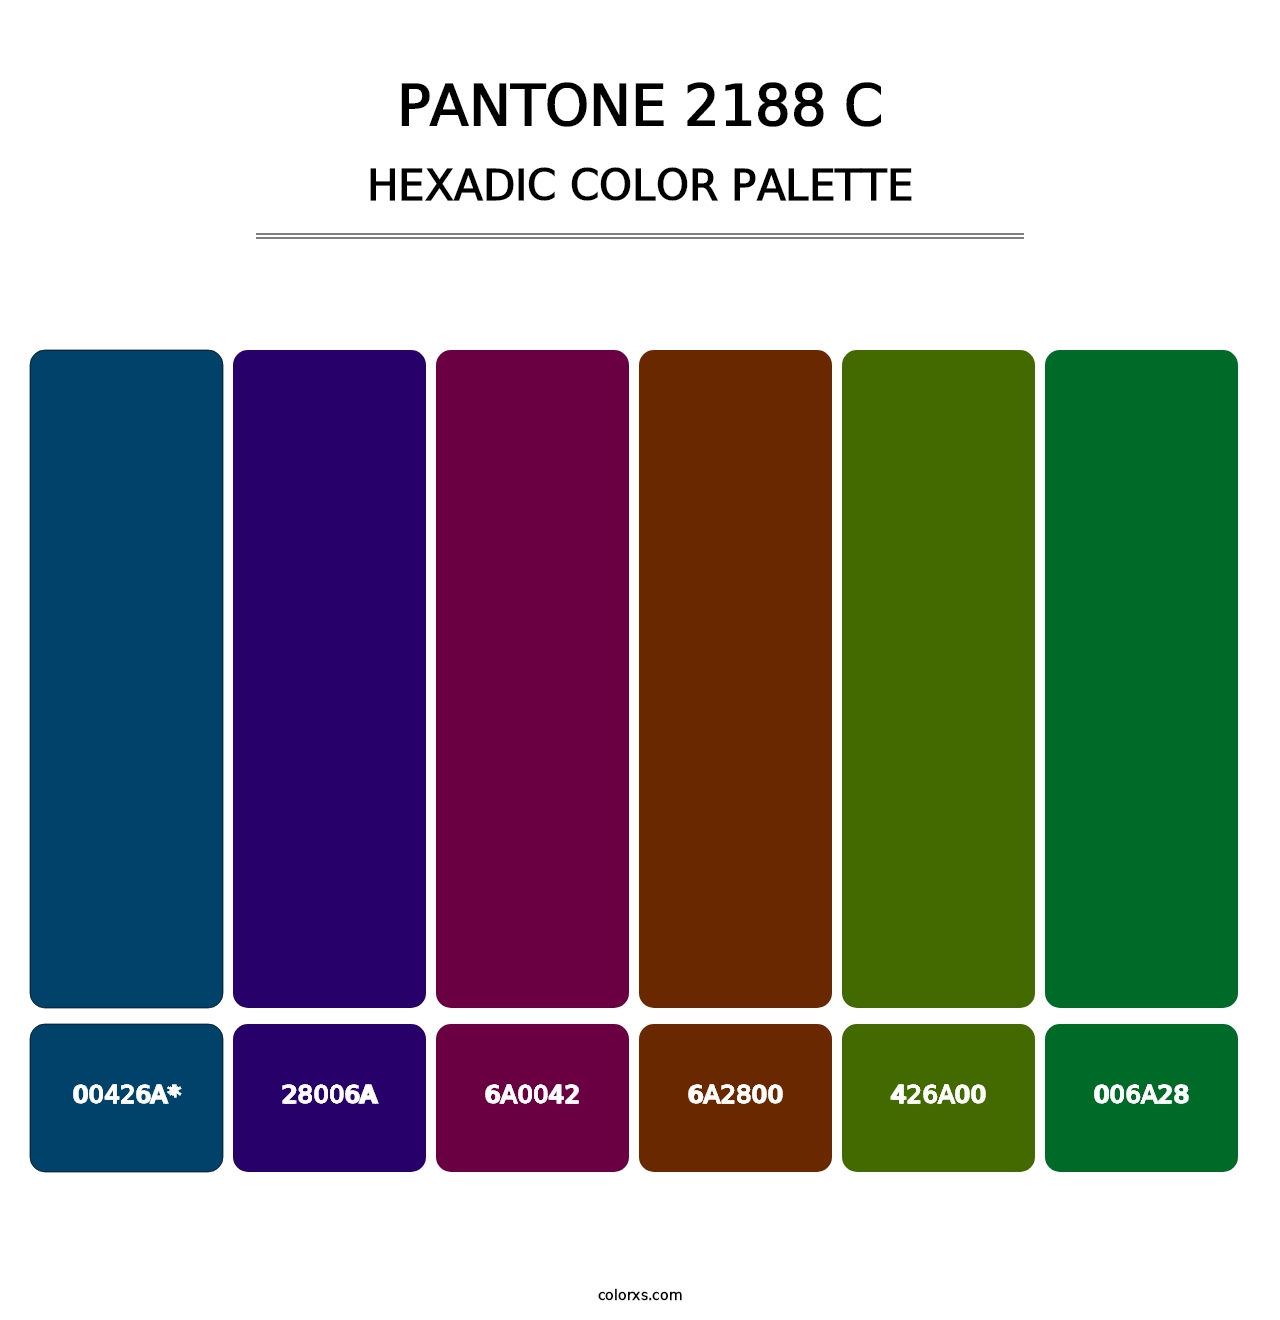 PANTONE 2188 C - Hexadic Color Palette